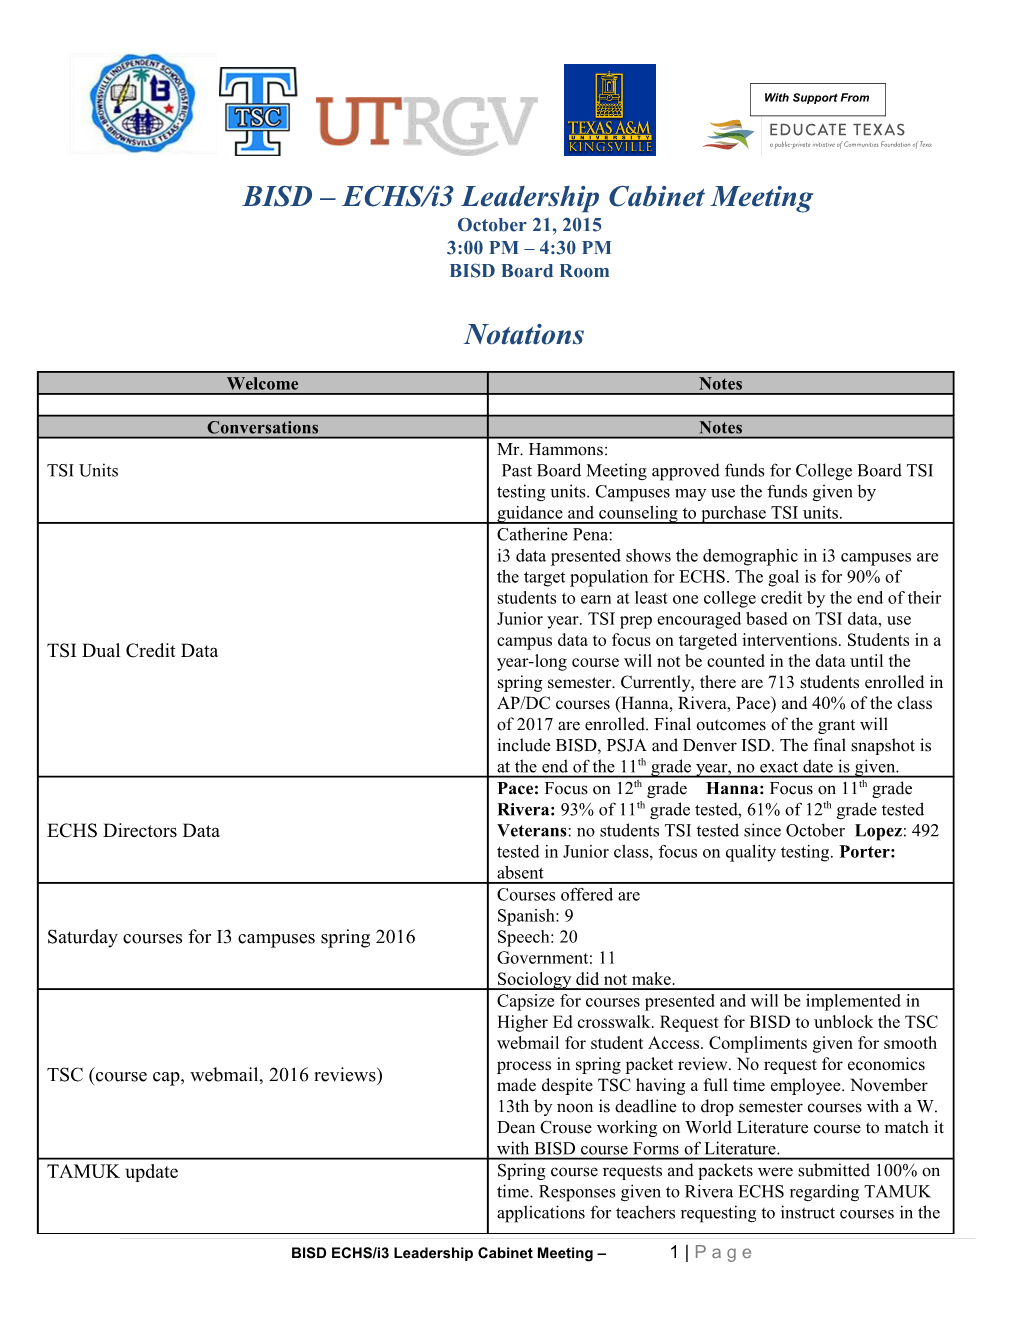 BISD ECHS/I3 Leadership Cabinet Meeting